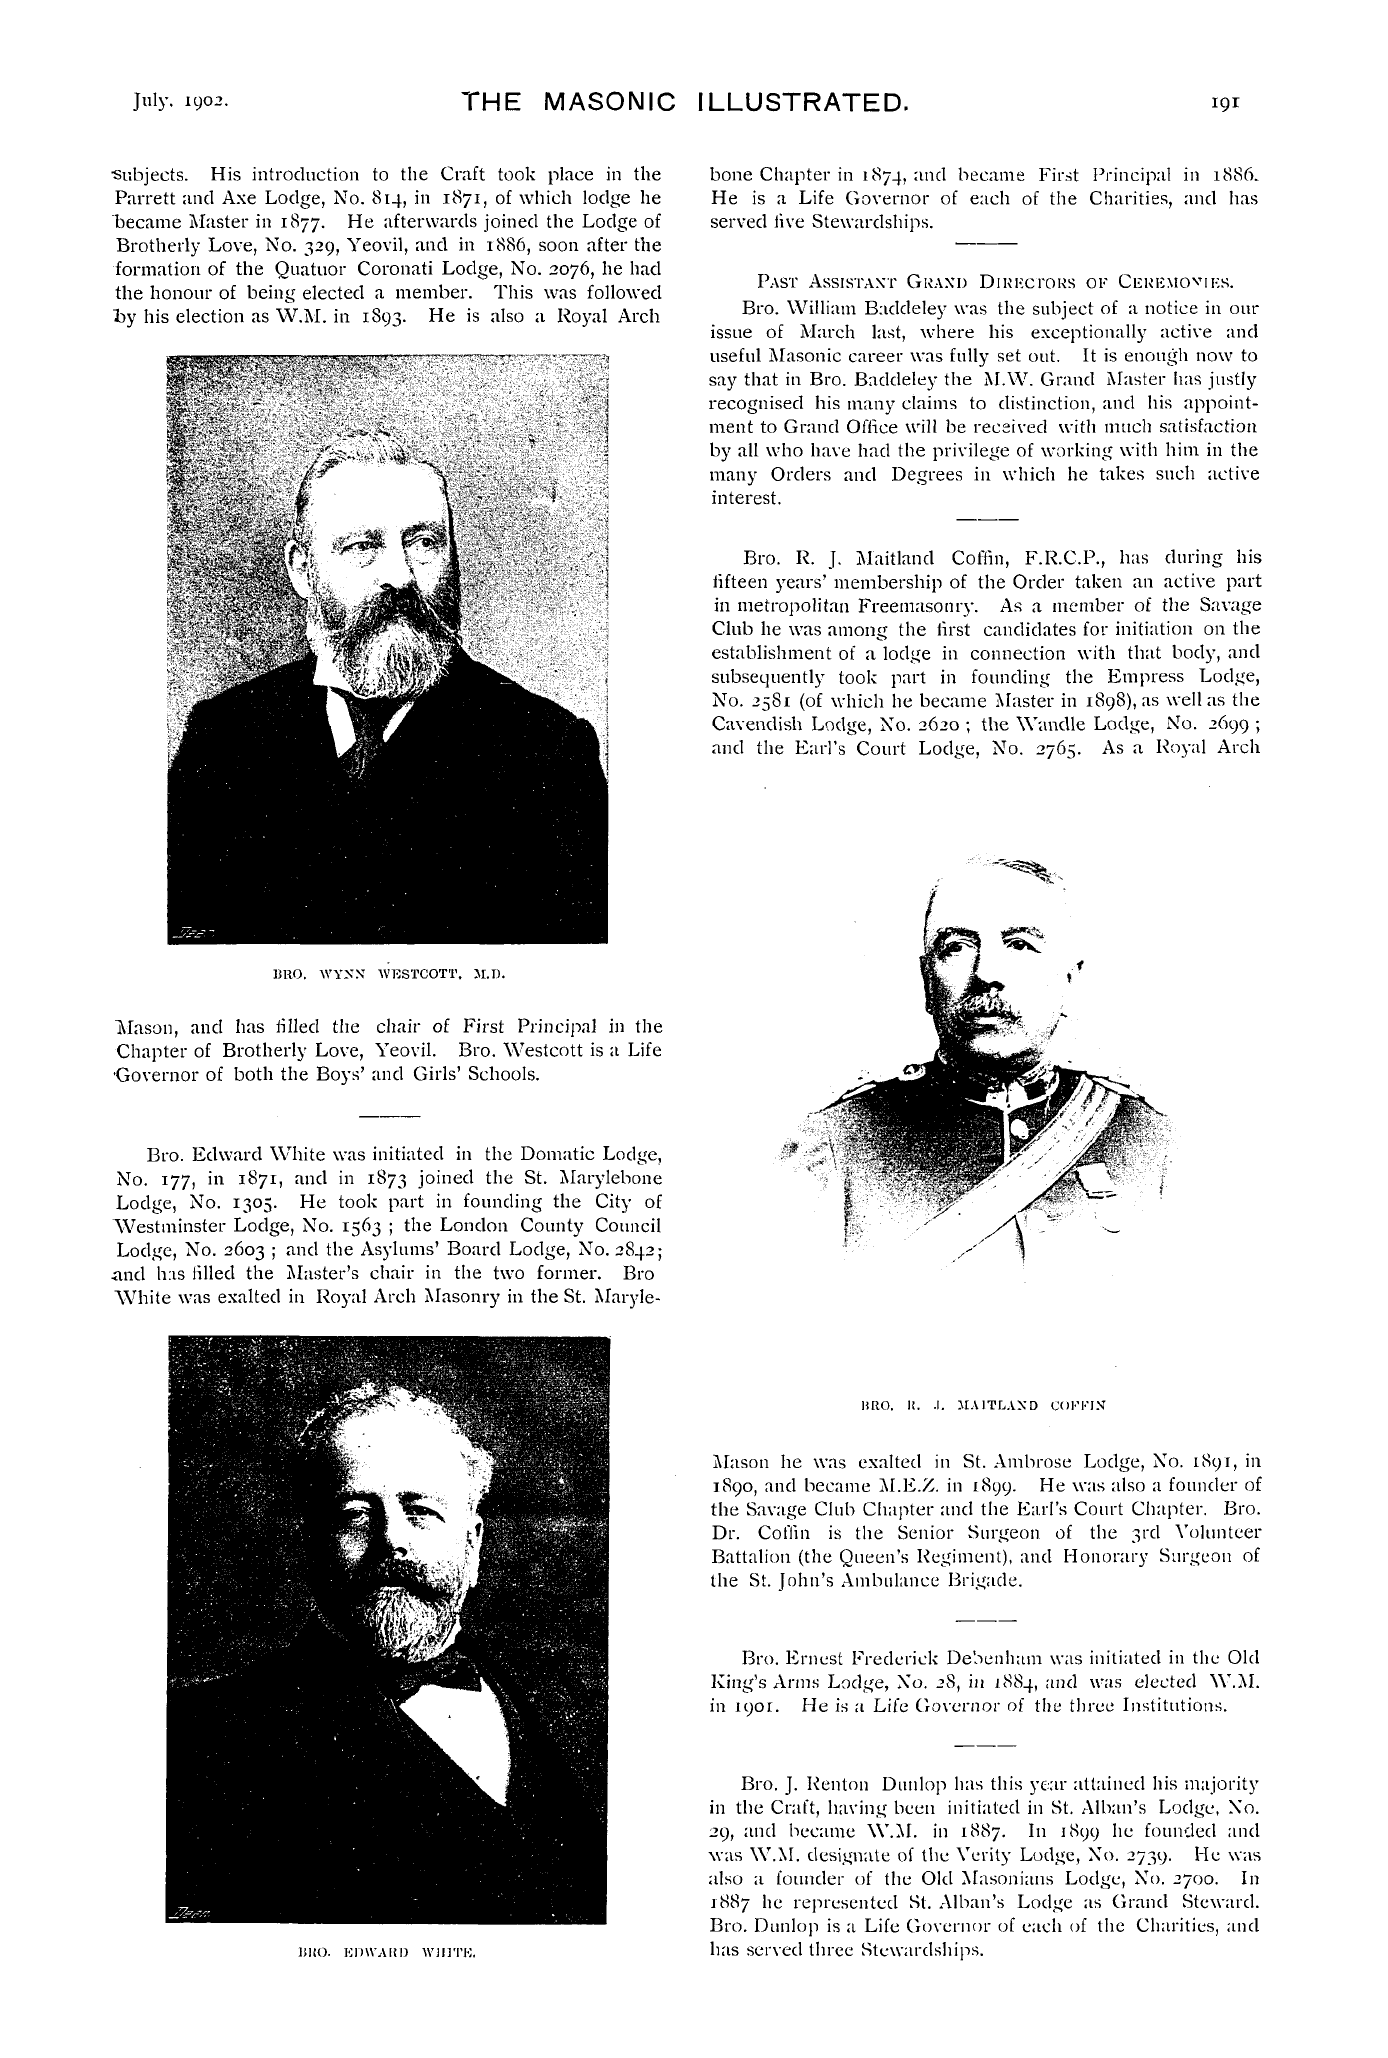 The Masonic Illustrated: 1902-07-01: 7